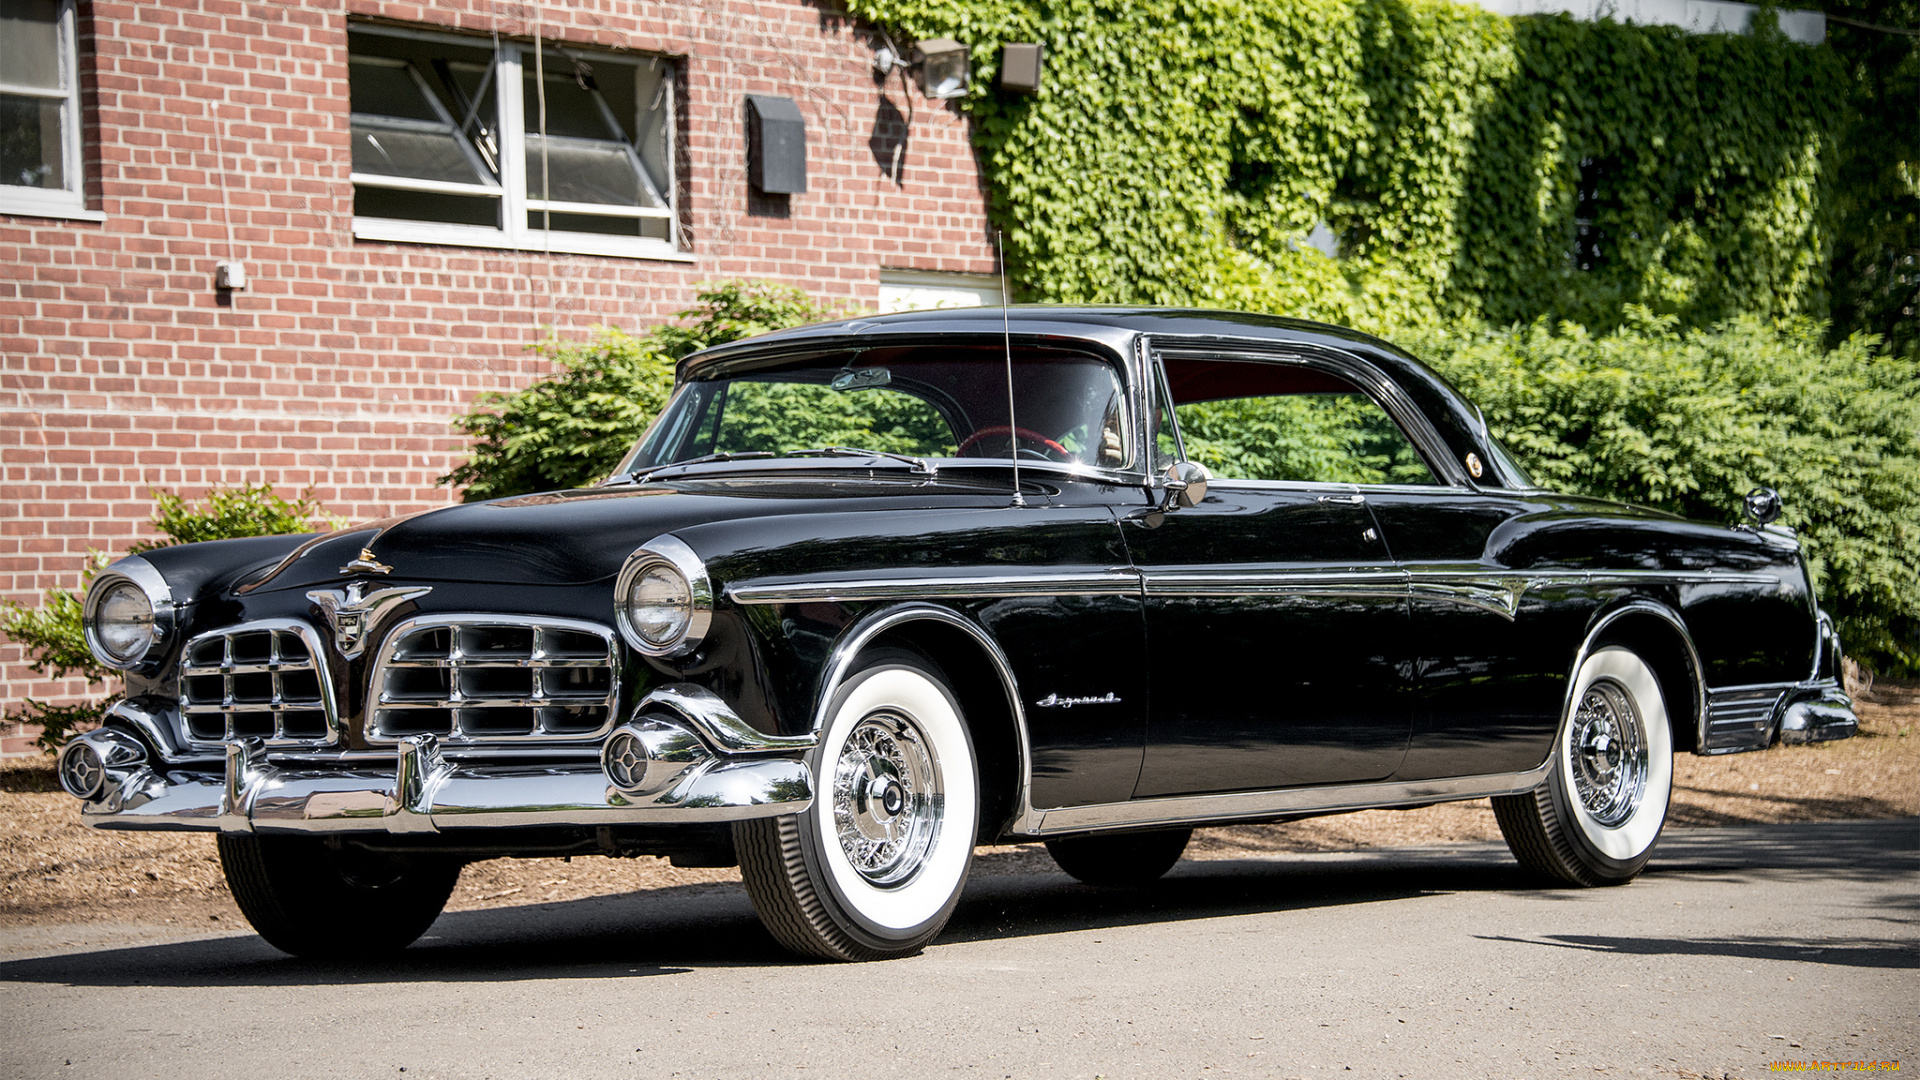 imperial, newport, coupe, , 1955, автомобили, chrysler, автопробег, выставка, автошоу